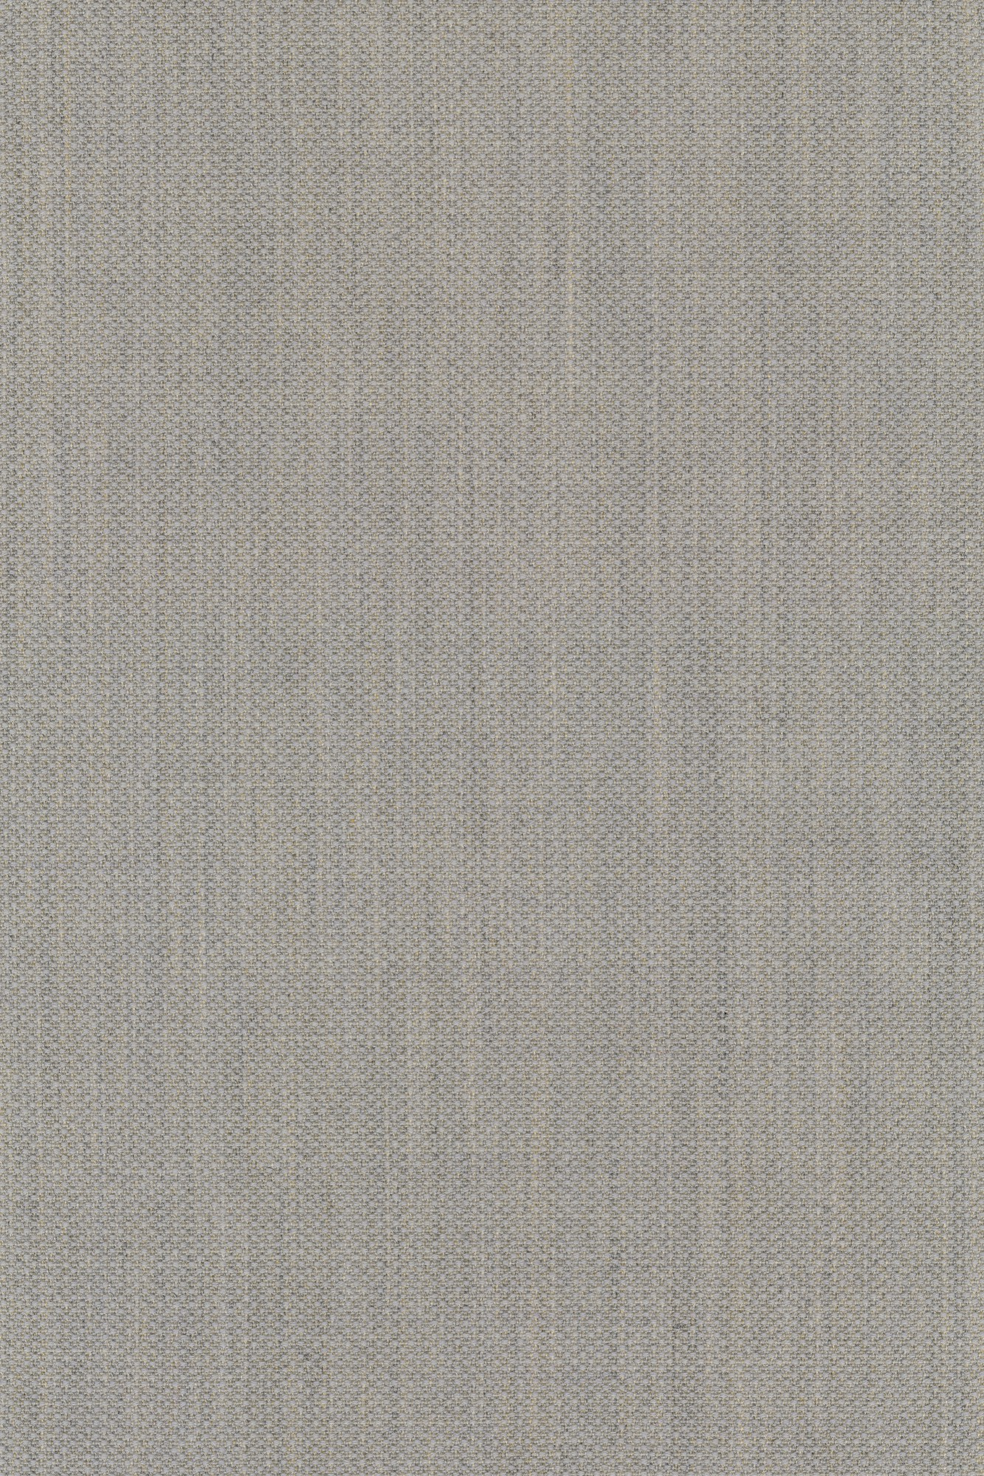 Fabric sample Fiord 201 grey